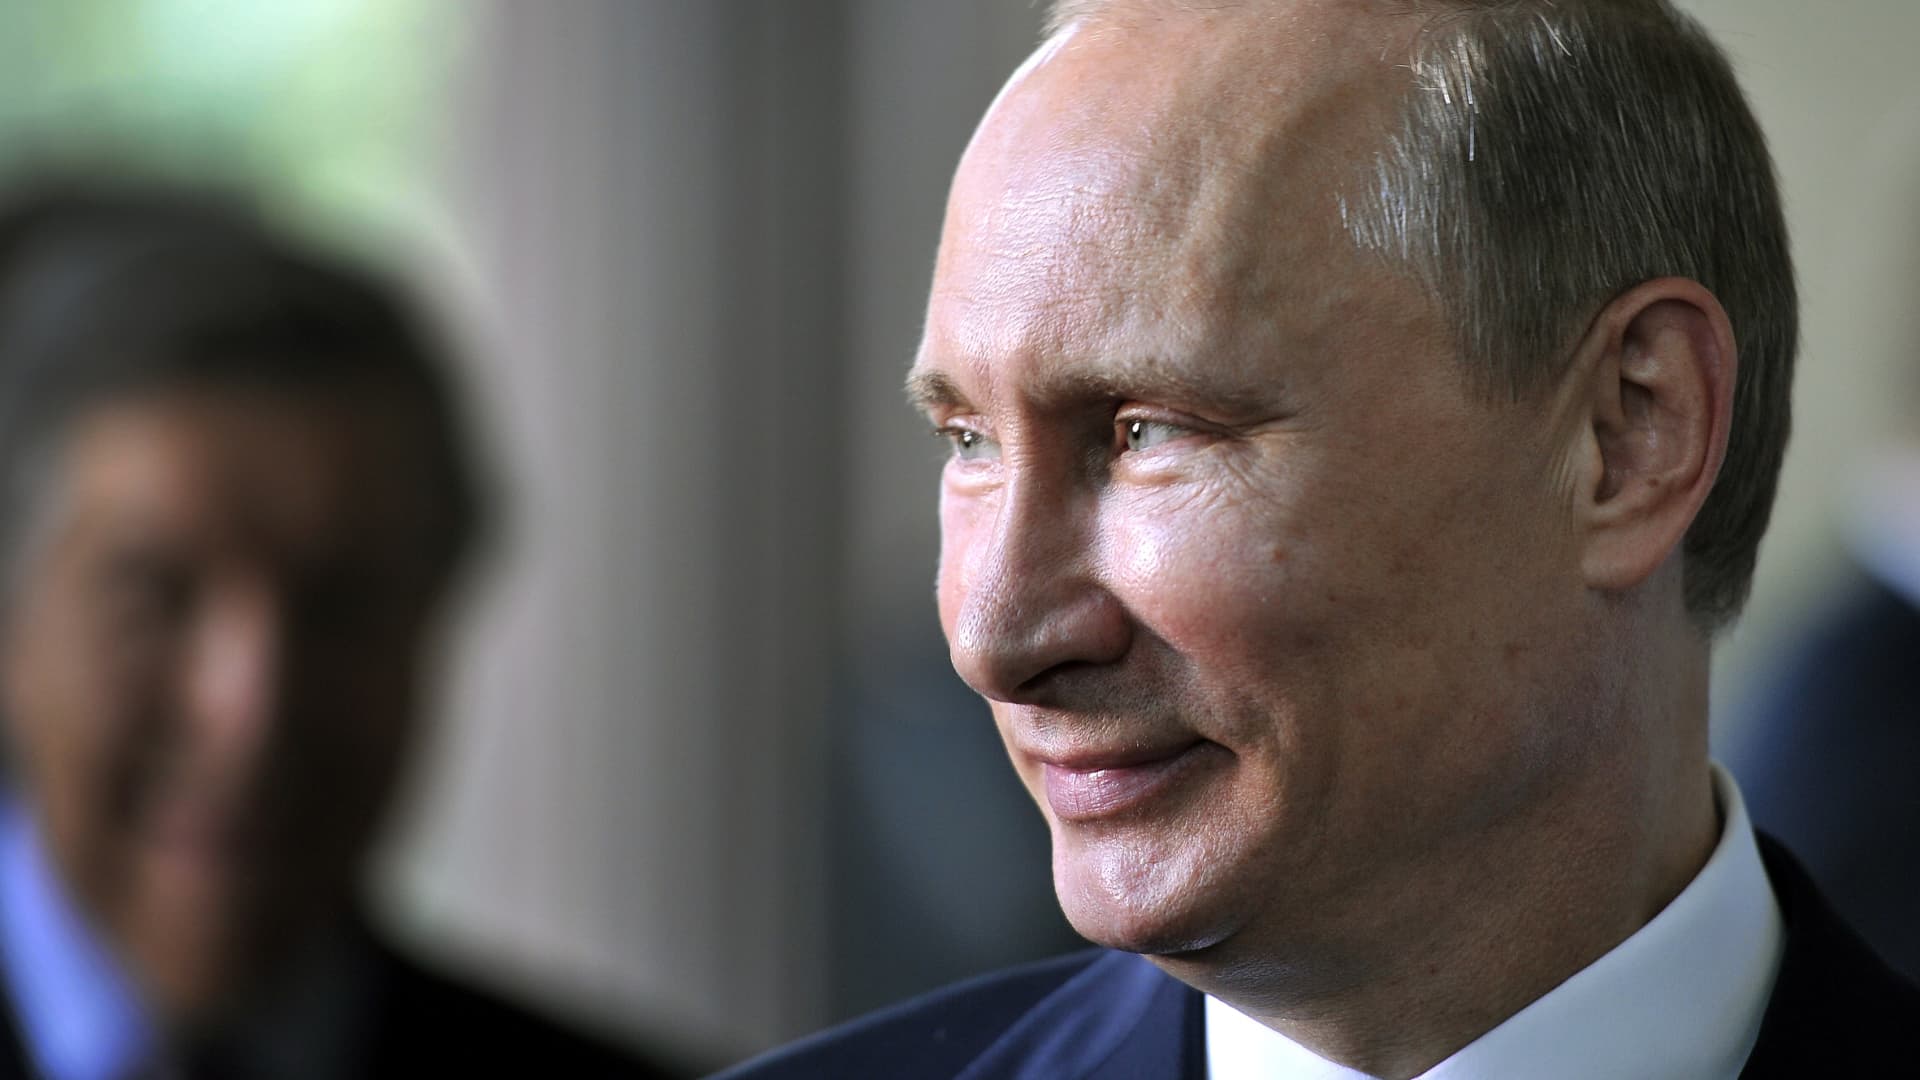 Russian Prime Minister Vladimir Putin back in 2011.